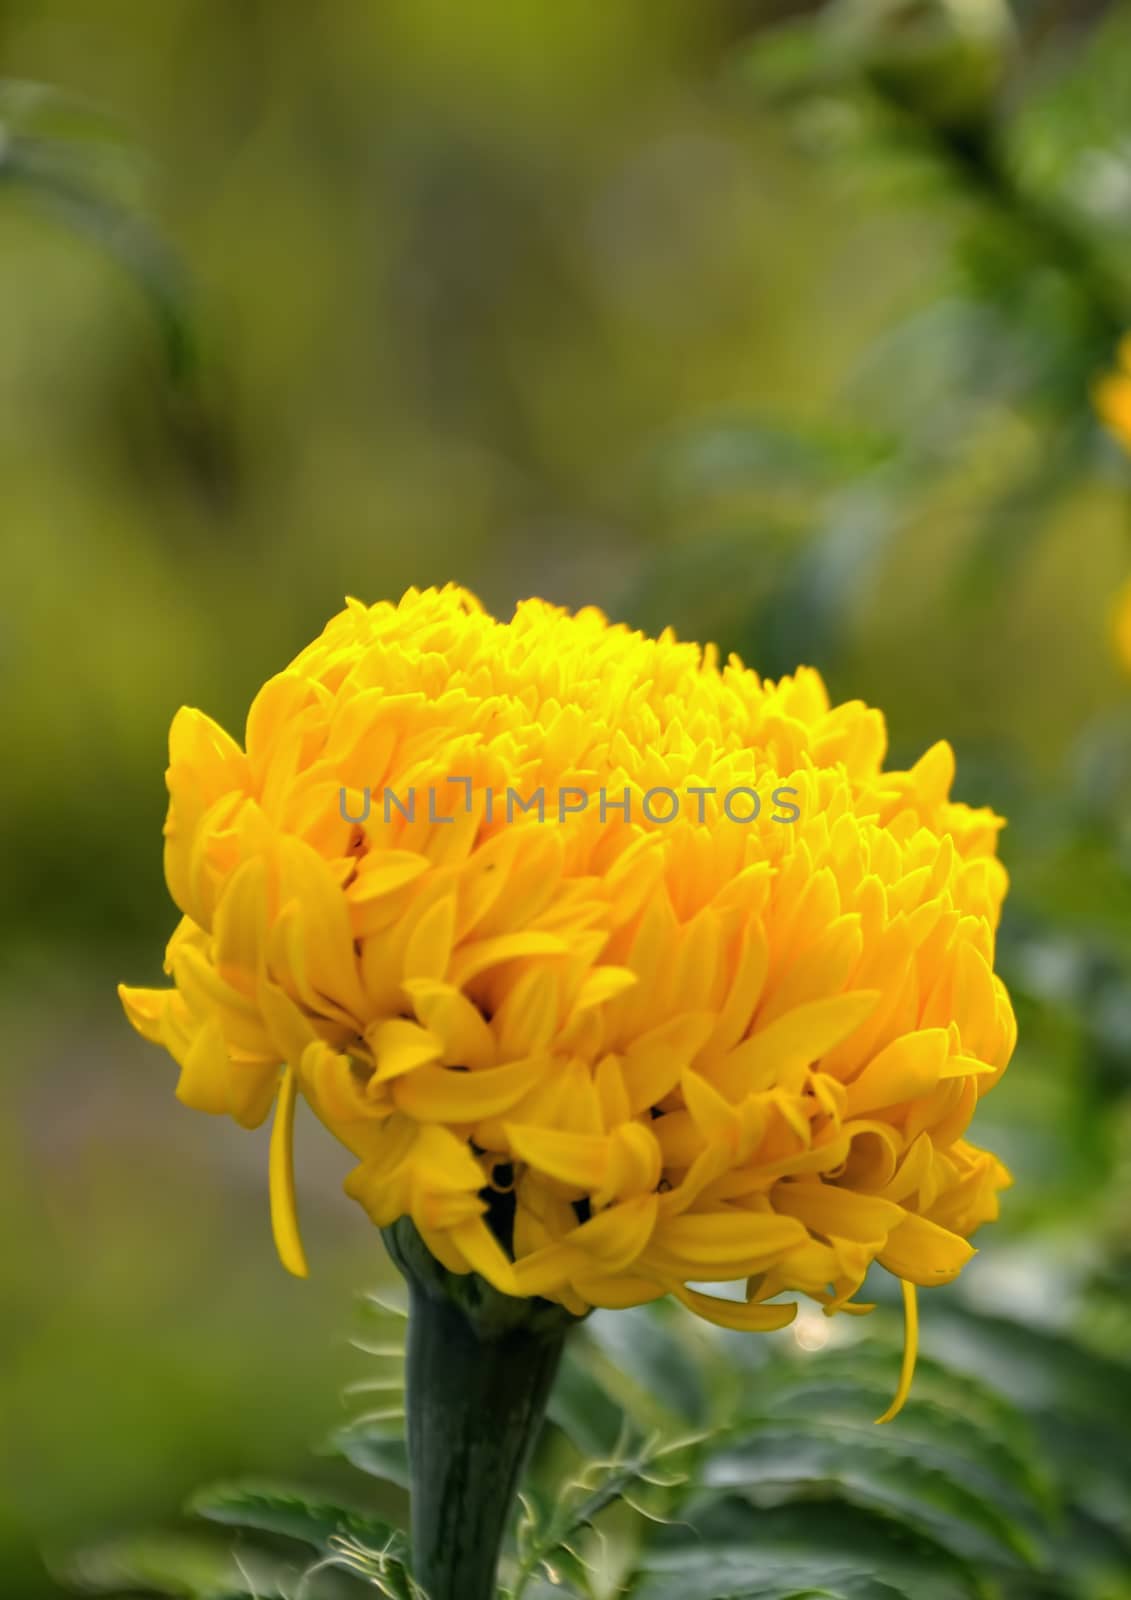 a beautifu marigold flower